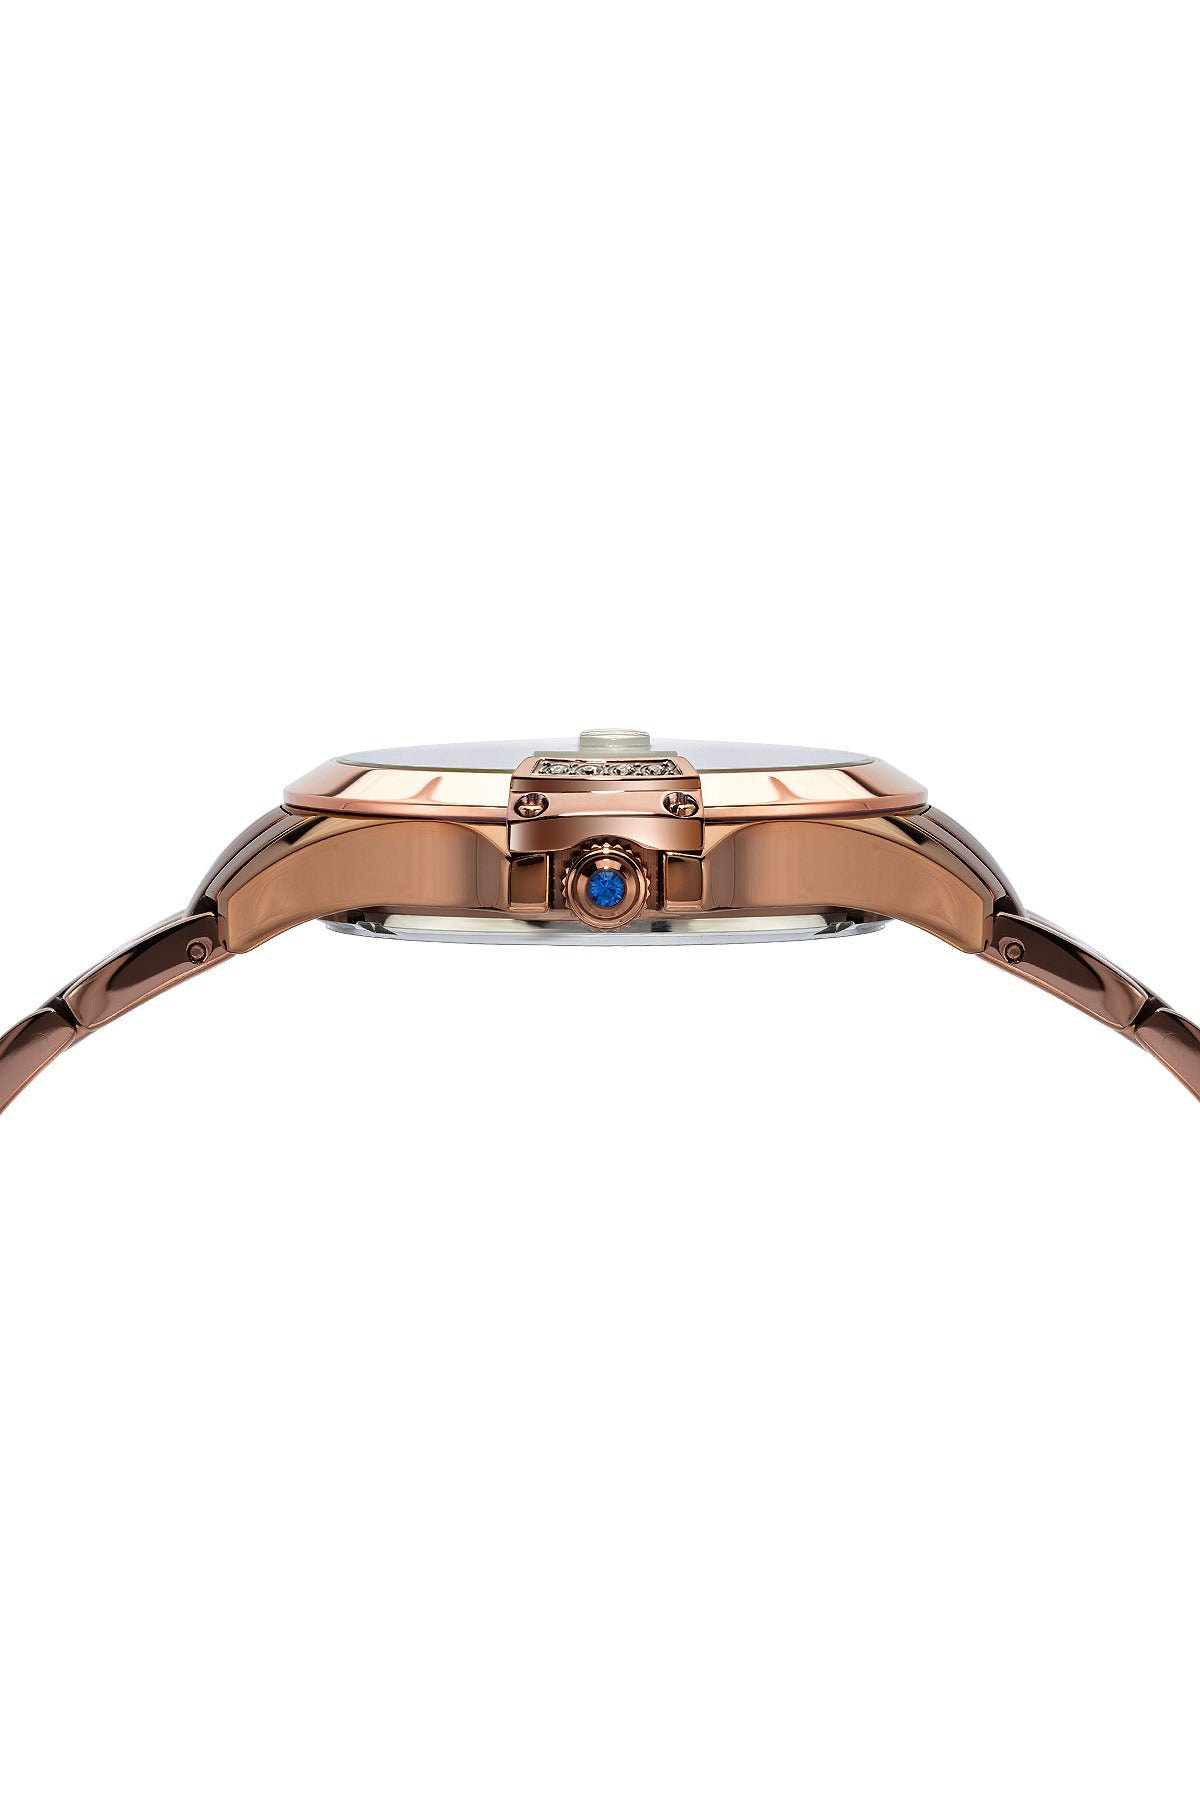 Porsamo Bleu Olivia luxury women's stainless steel watch, rose, brown 984BOLS